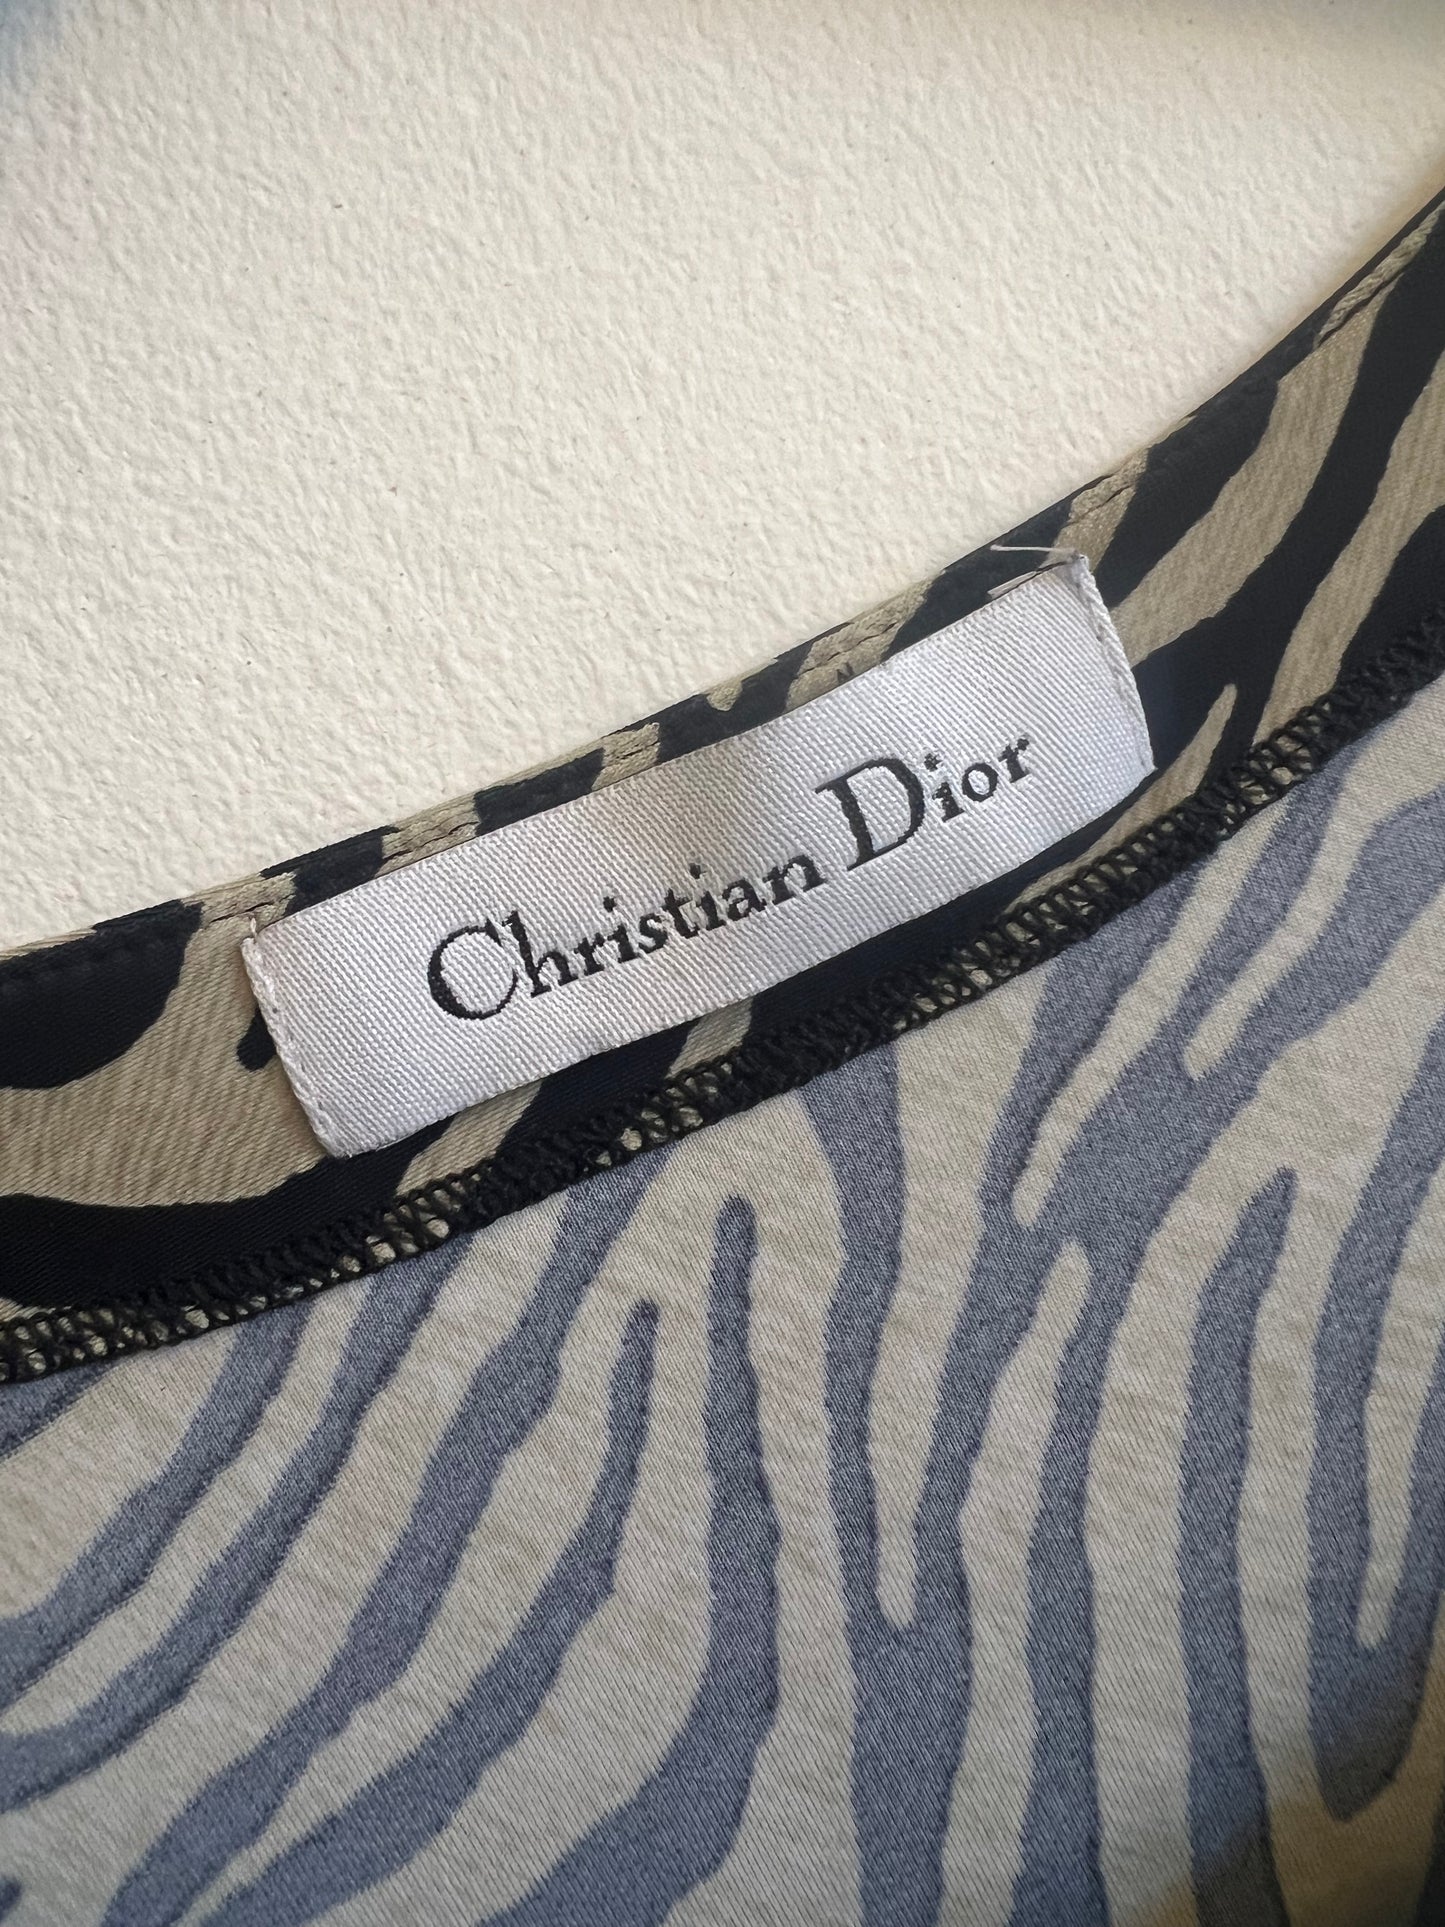 Christian Dior body